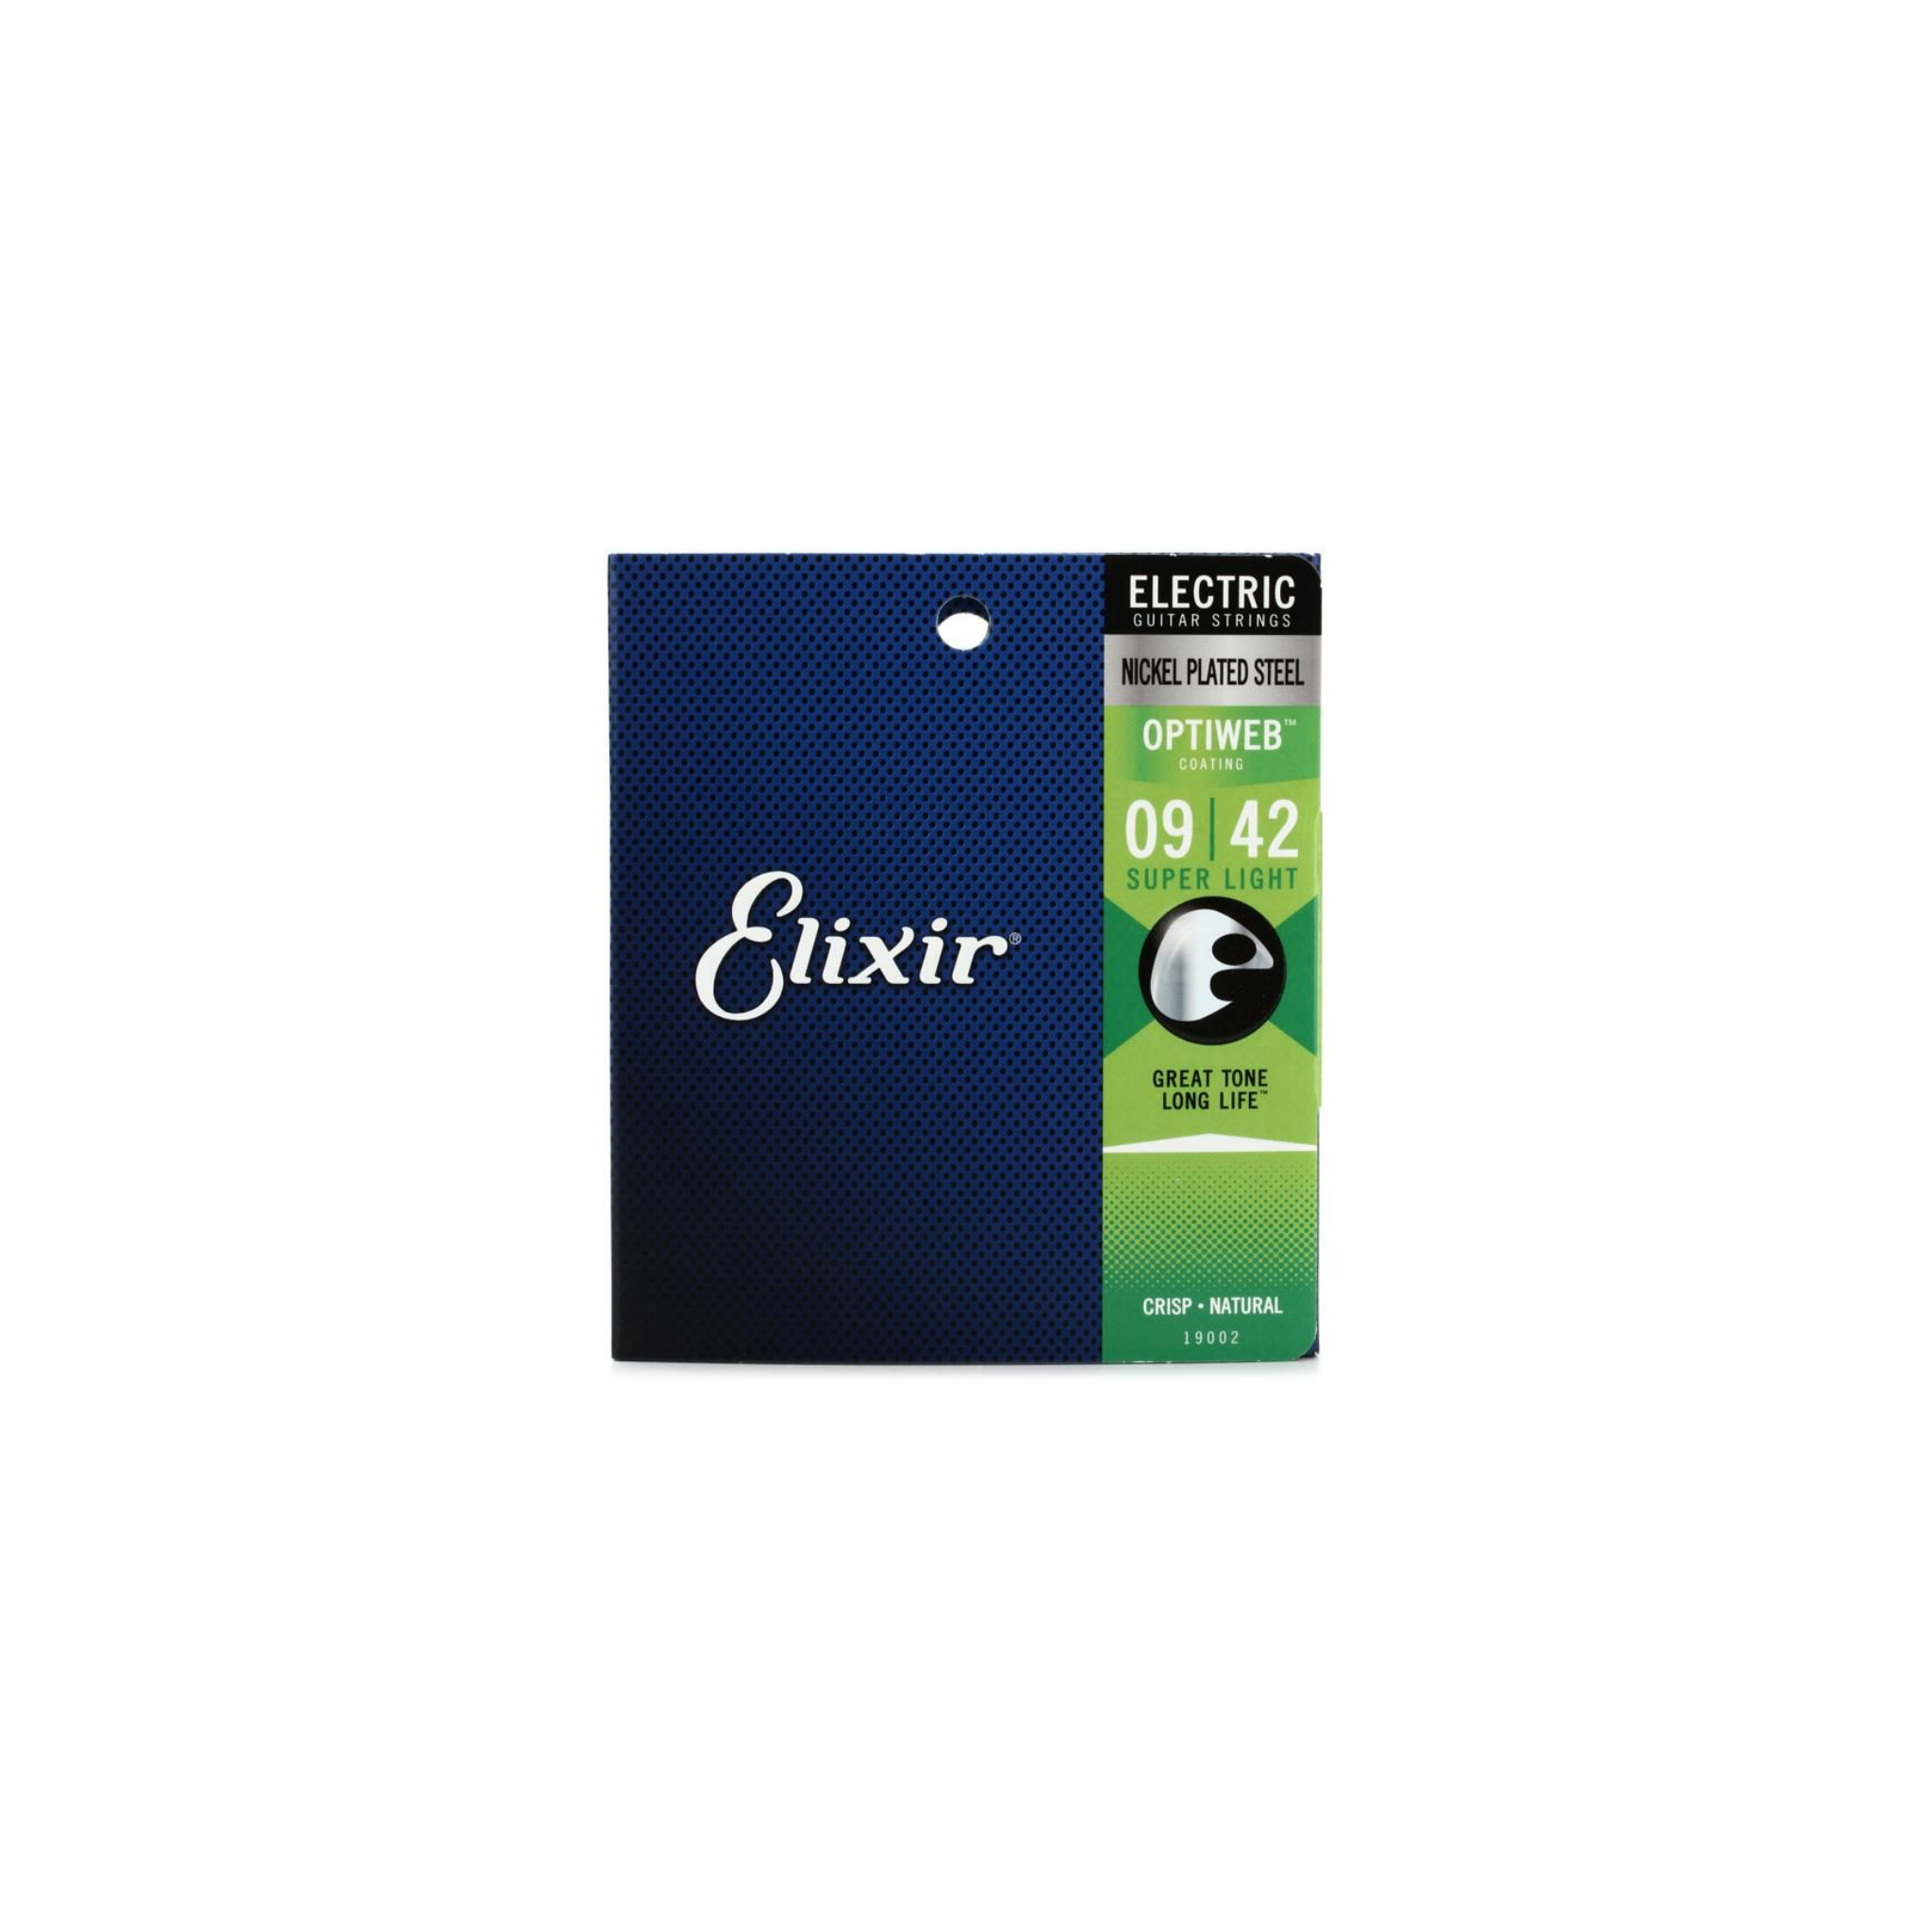 Elixir 9-42 Electric Optiweb Super Light